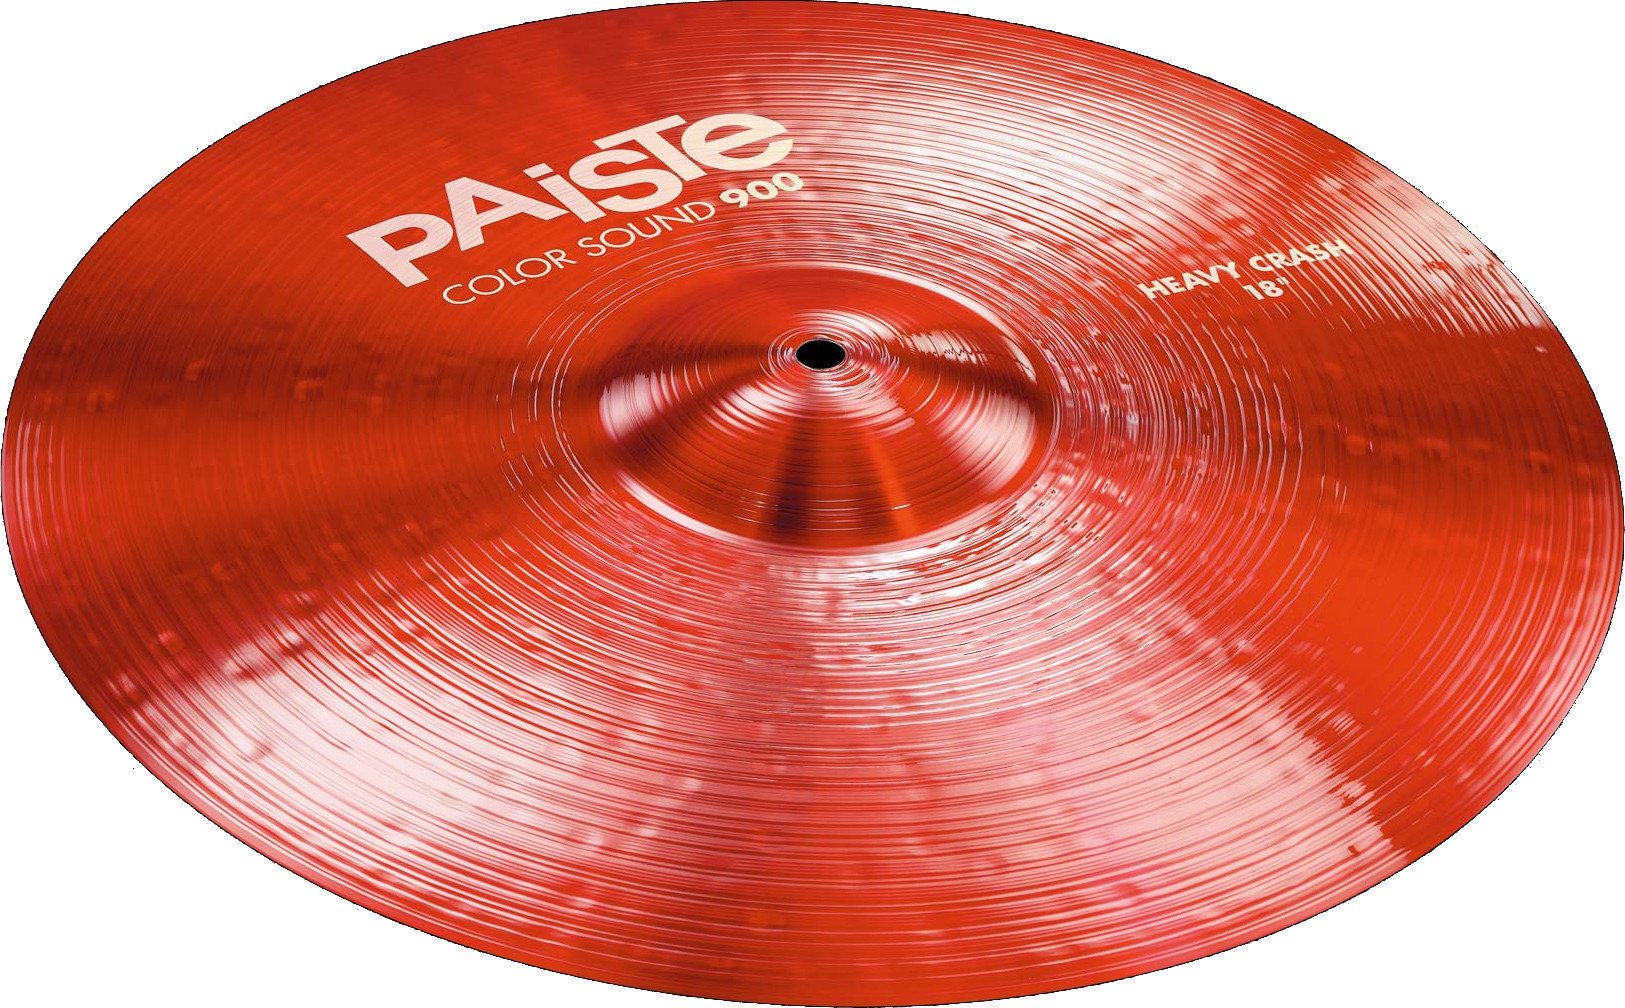 Cymbale crash Paiste Color Sound 900  Heavy Cymbale crash 19" Rouge